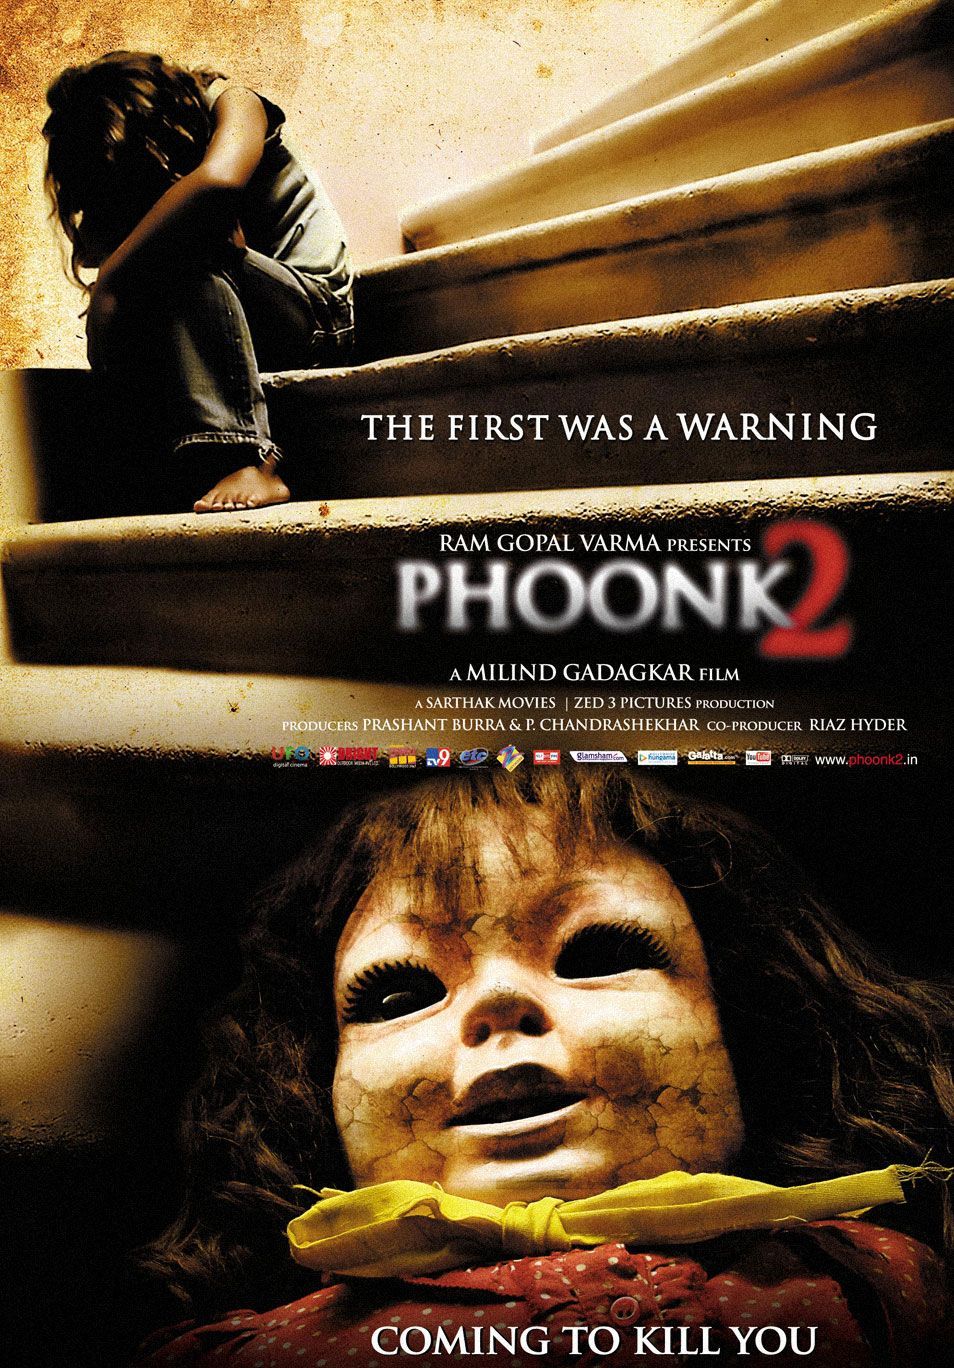 Phoonk 3 Full Movie - 4 245 701 просмотр4,2 млн просмотров. - Kairuser